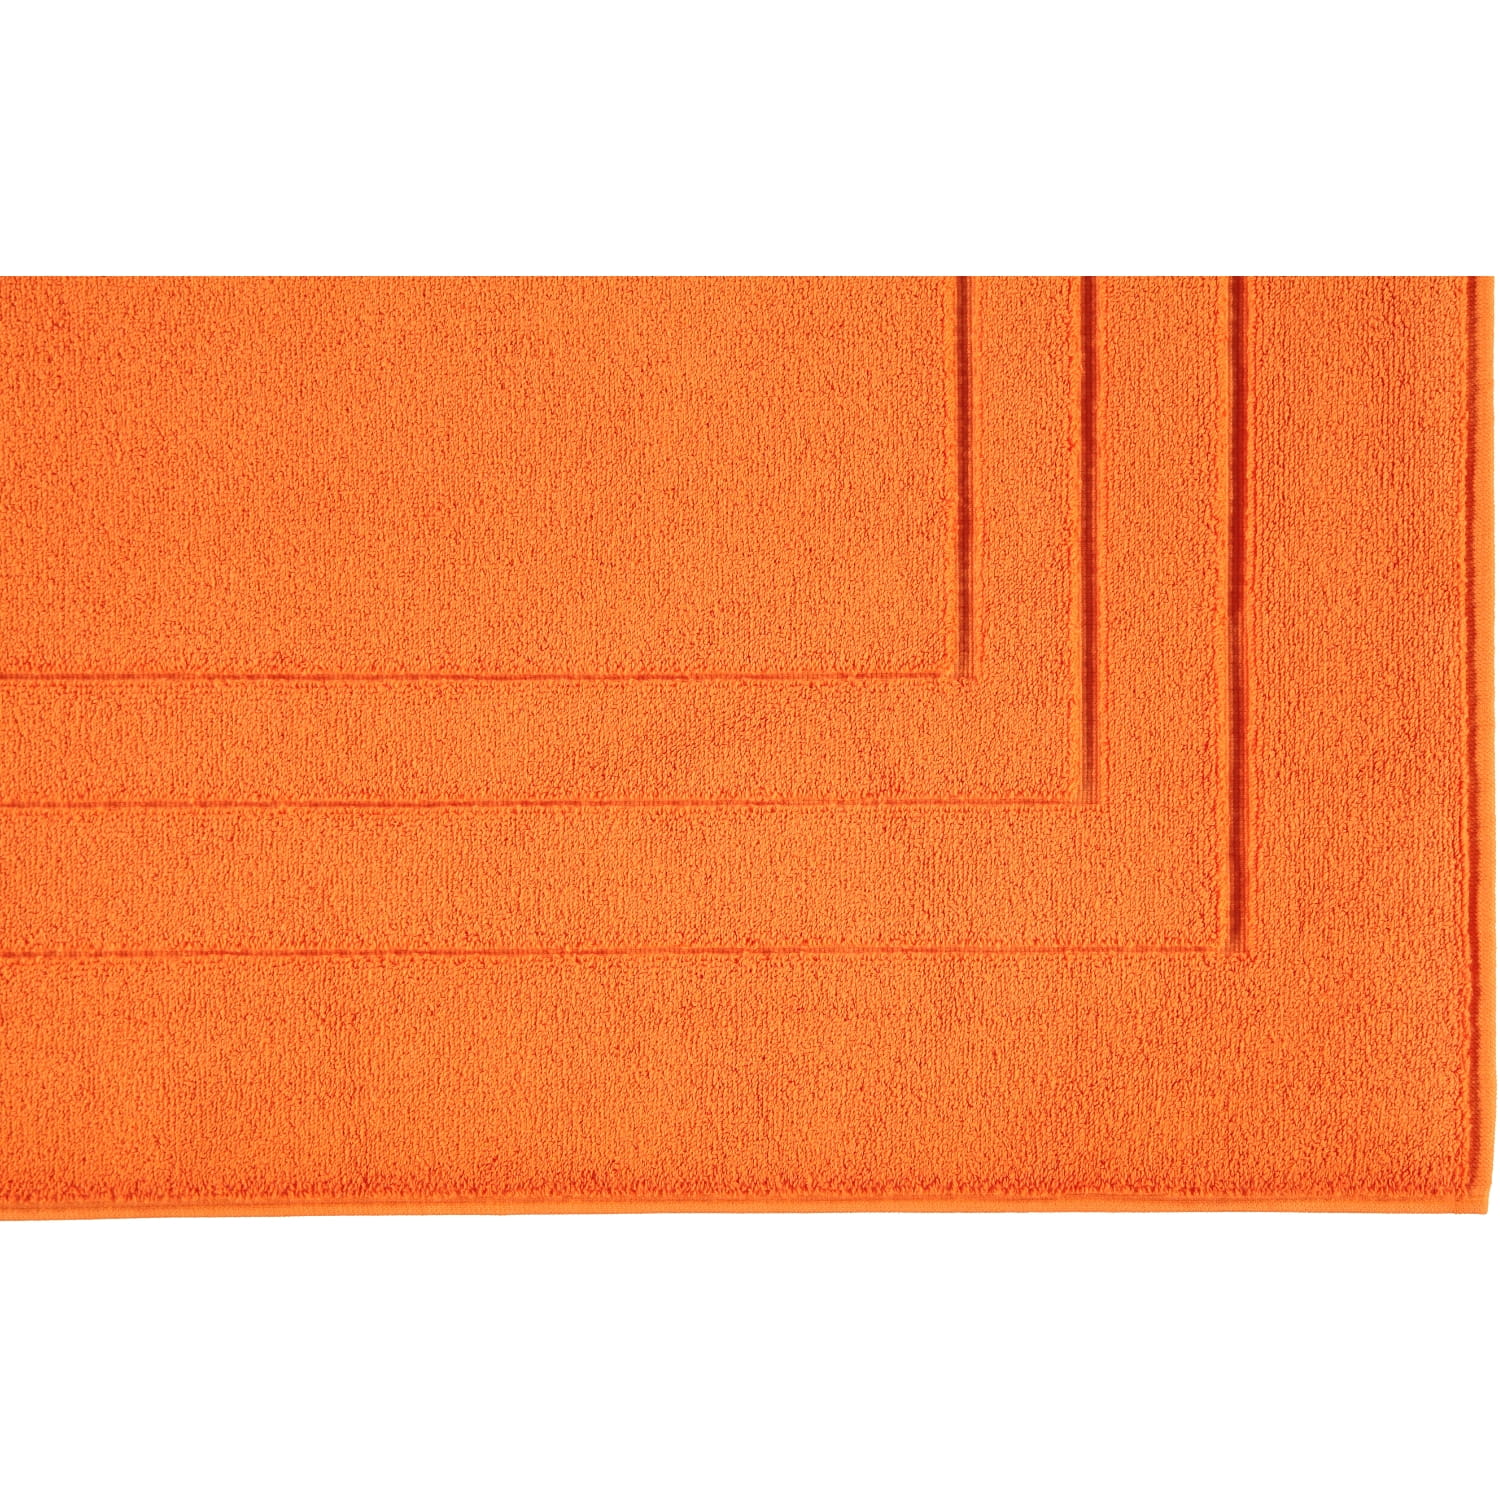 Vossen Badematte Calypso Feeling - Farbe: orange - 255 | Vossen Badematte |  Vossen | Marken